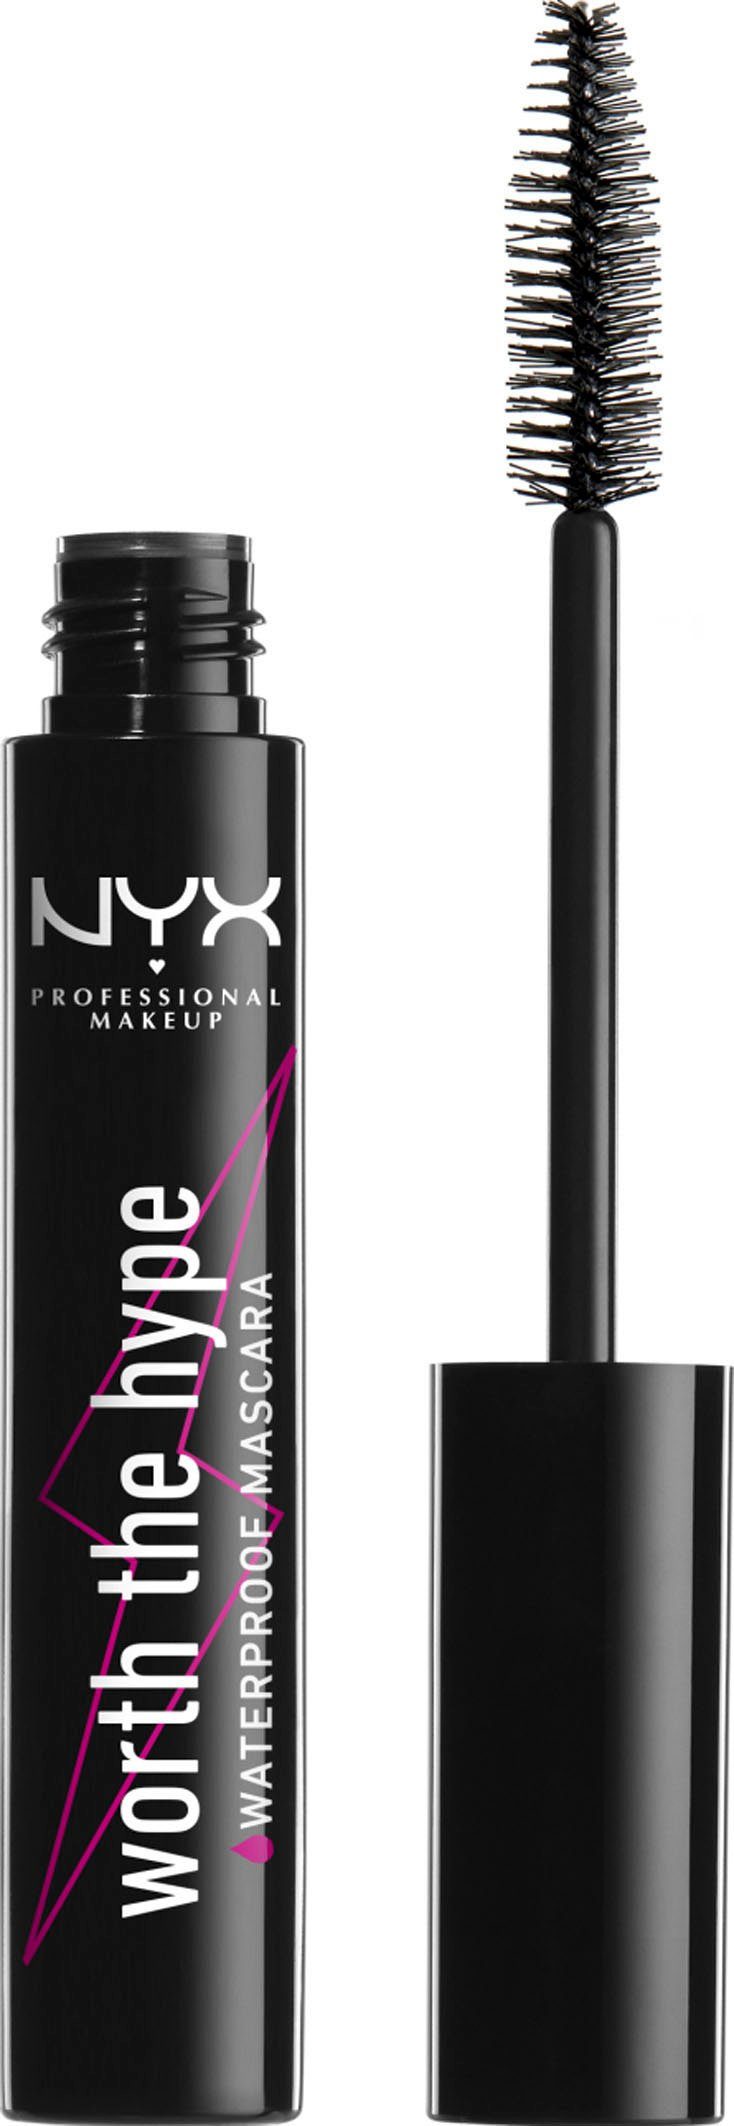 NYX Mascara Professional Makeup Worth Hype Mascara Waterproof The